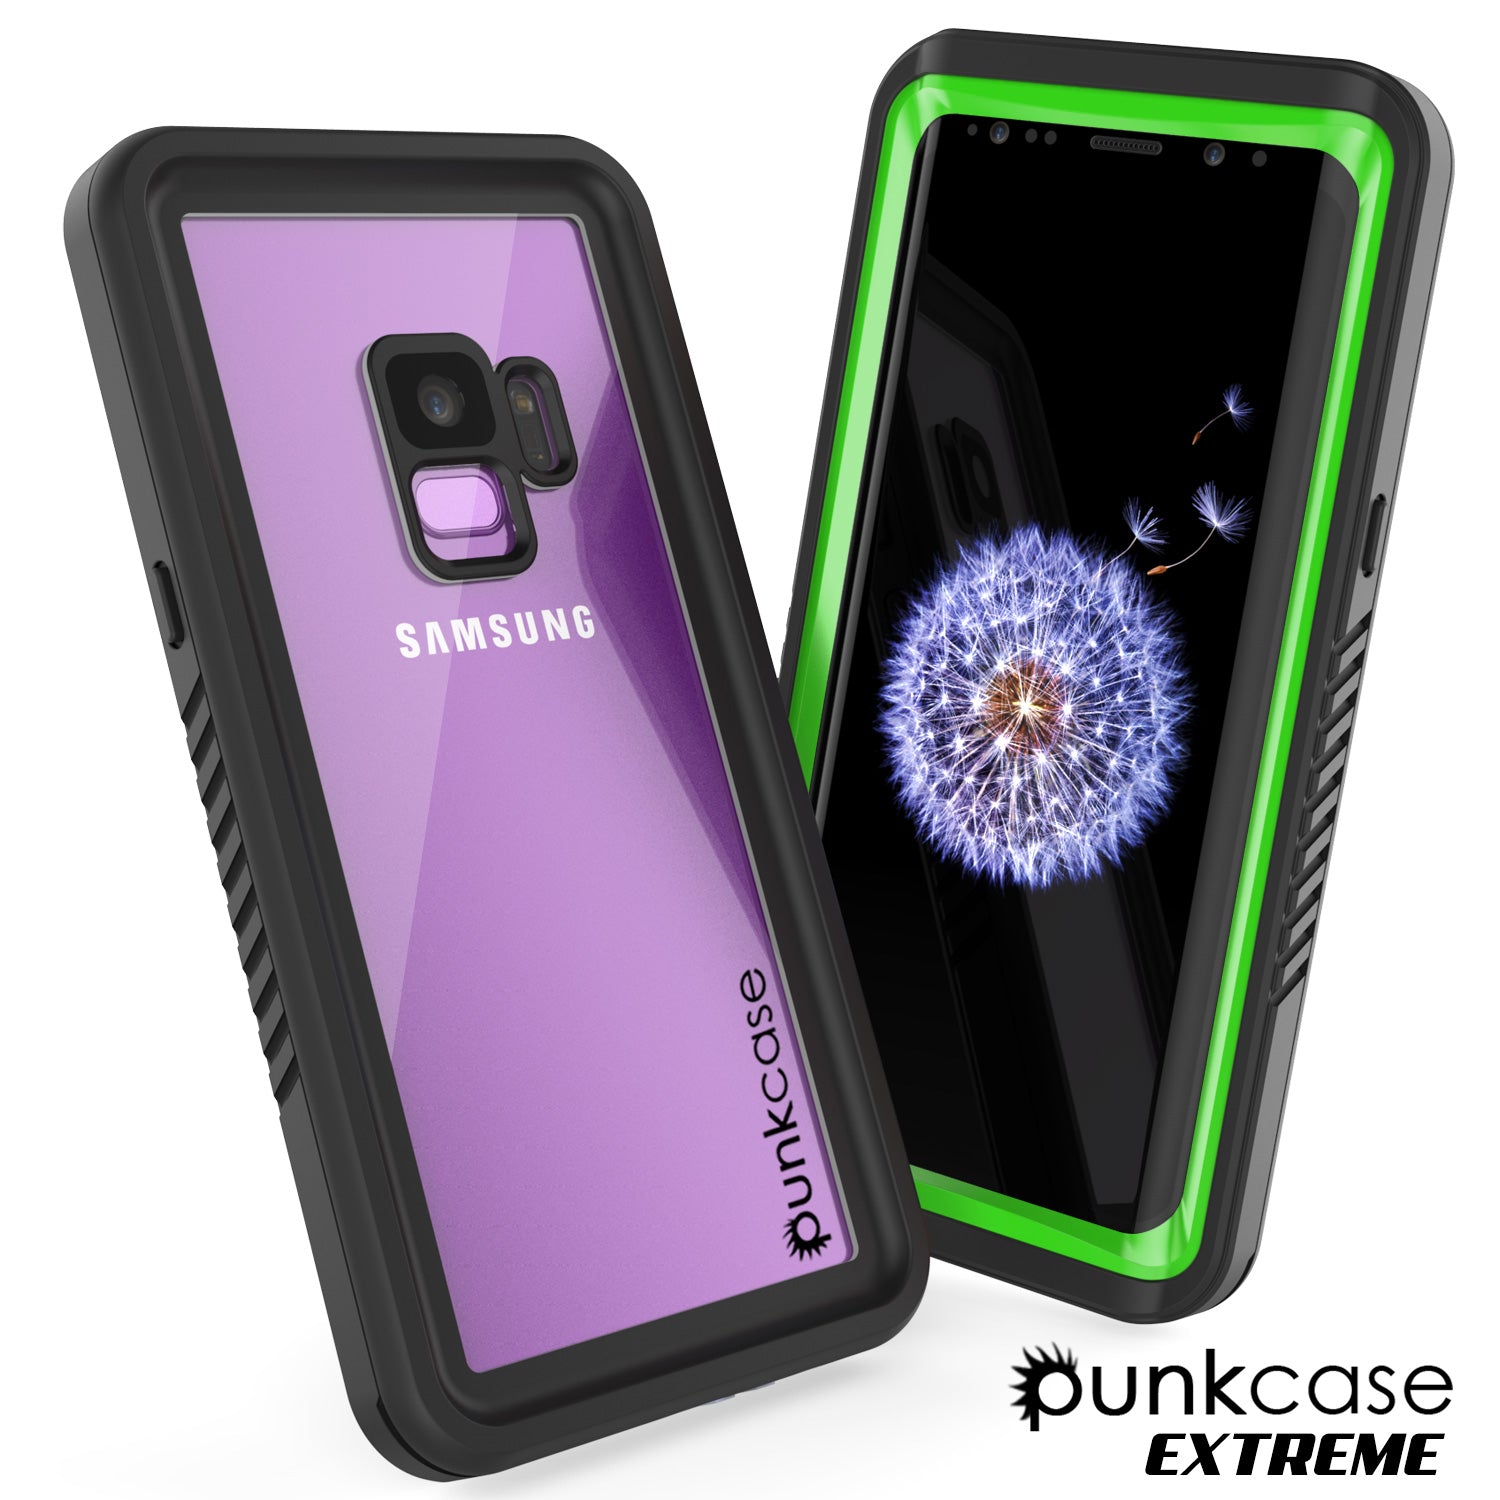 Galaxy S9 Plus Punkcase Extreme Armor Case Series [Light Green]